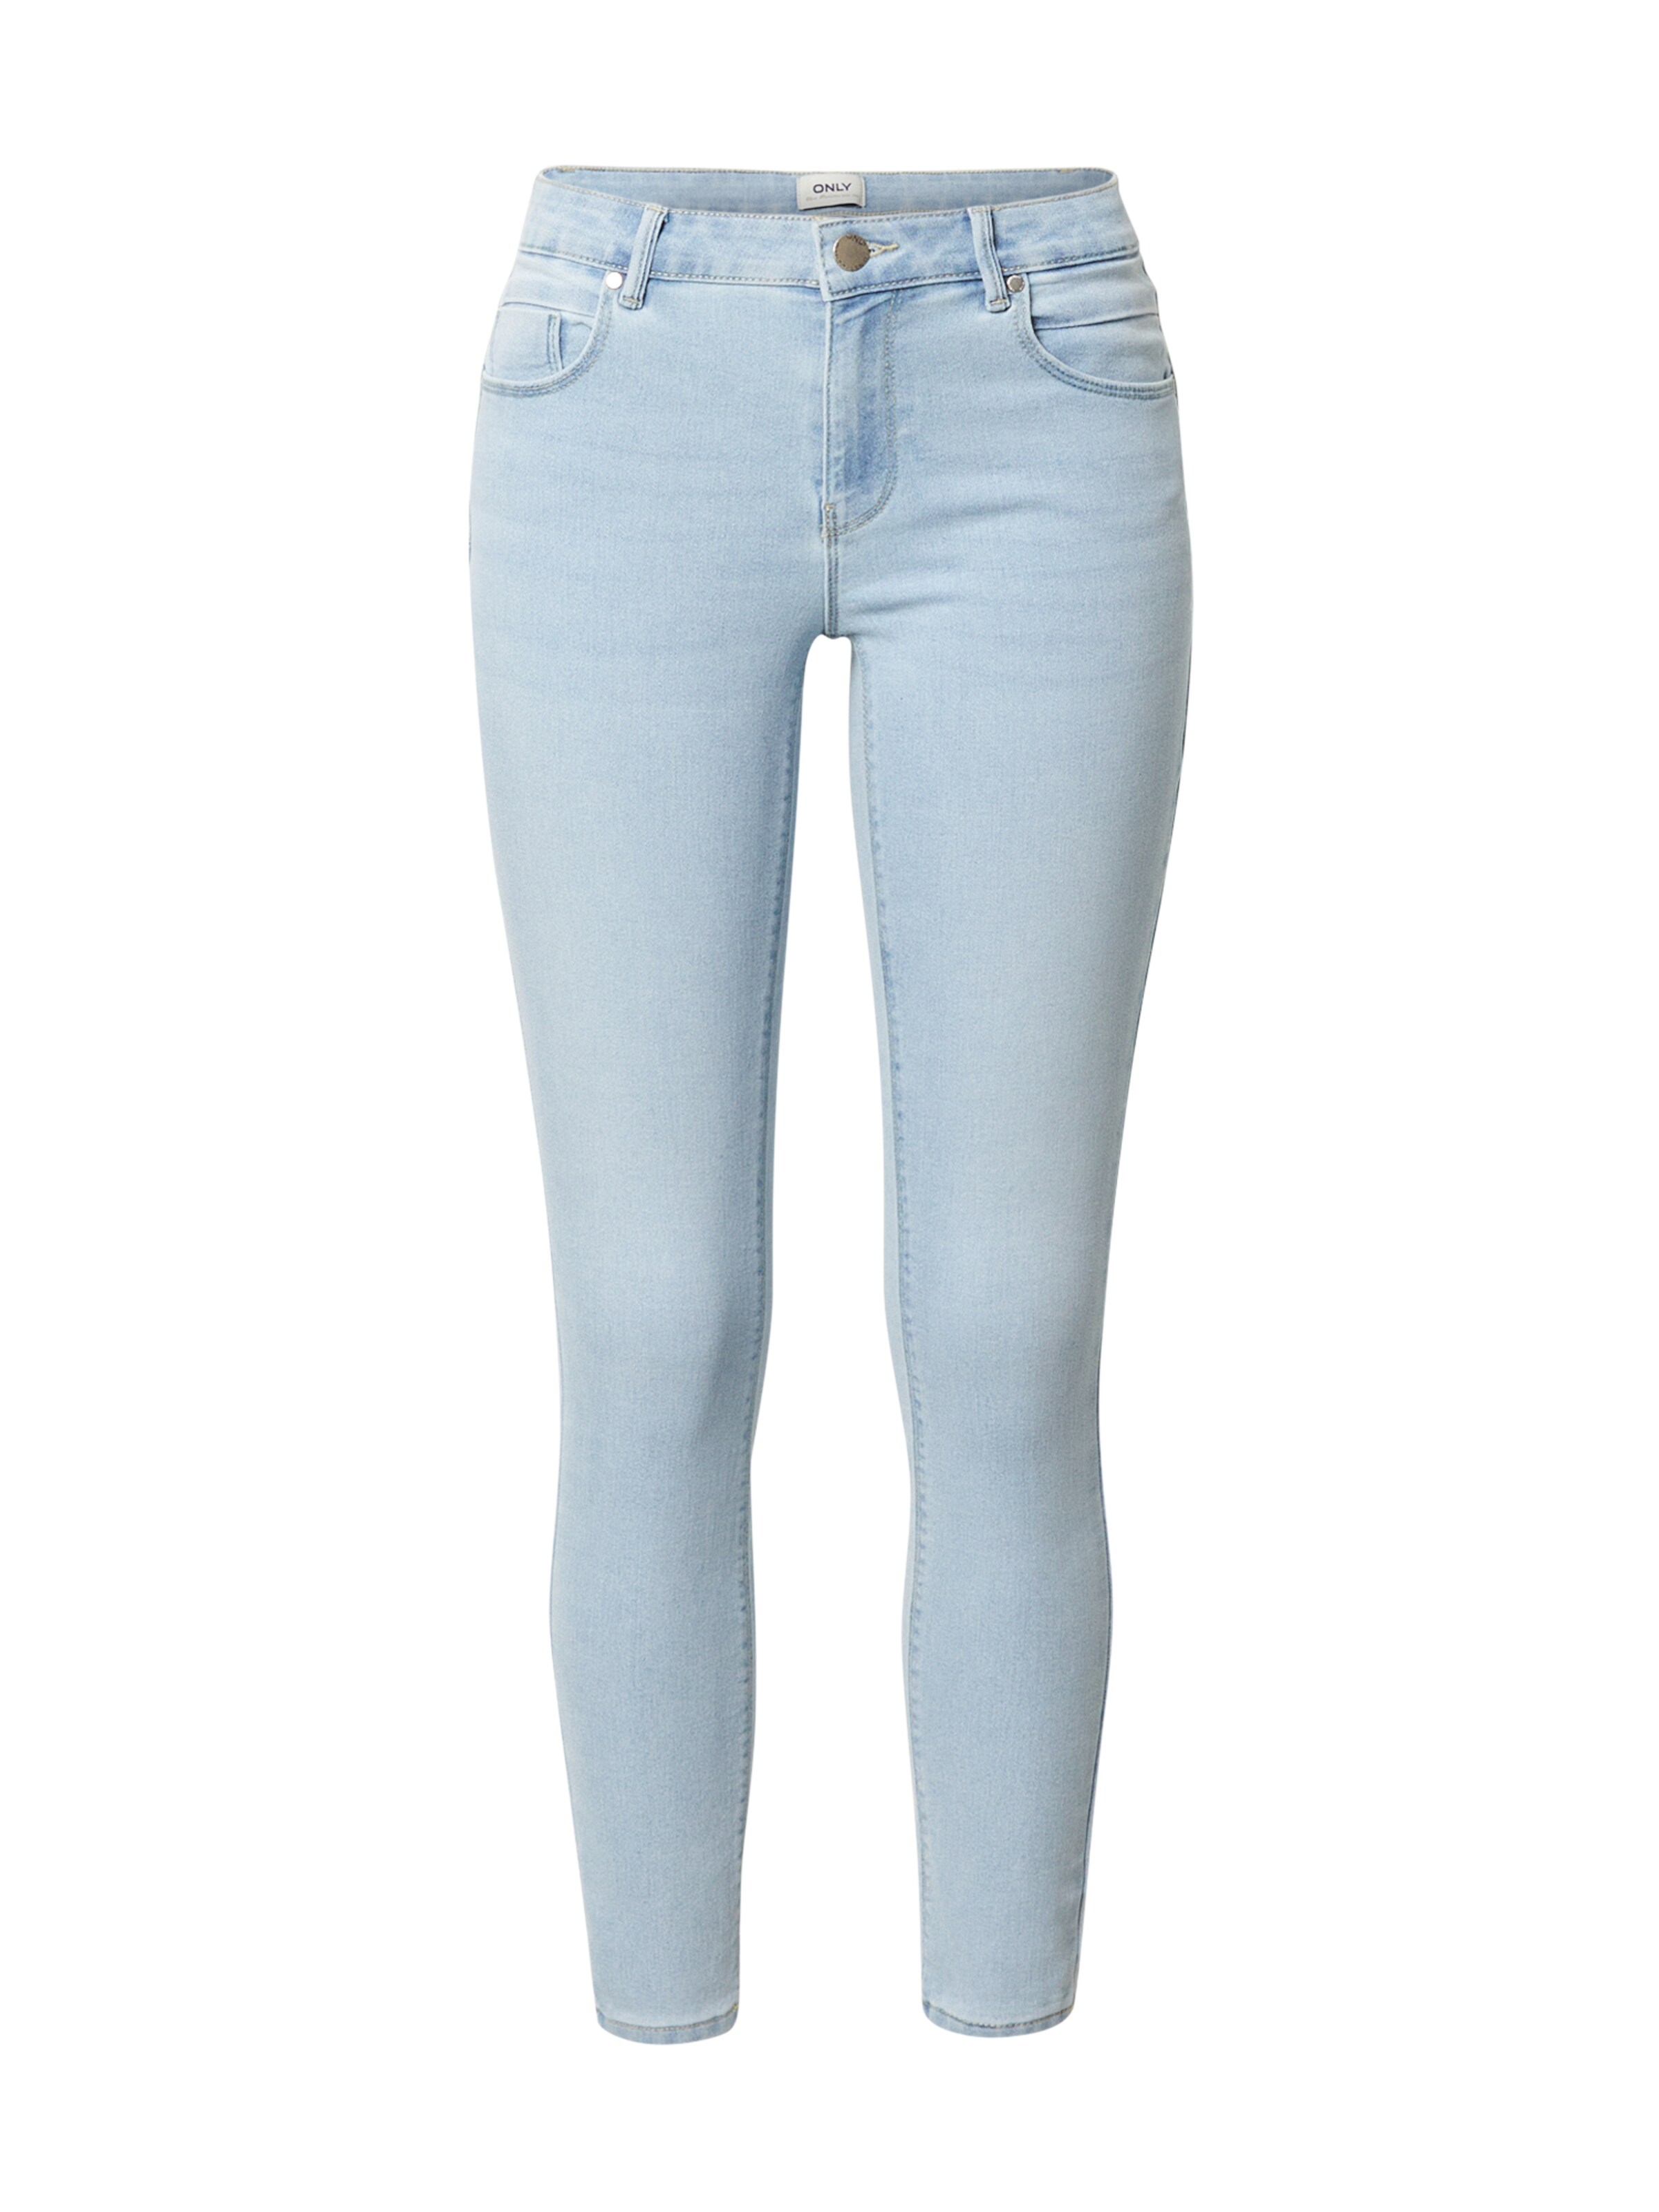 Jeans DAISY ABOUT YOU Donna Abbigliamento Pantaloni e jeans Jeans Jeans skinny 